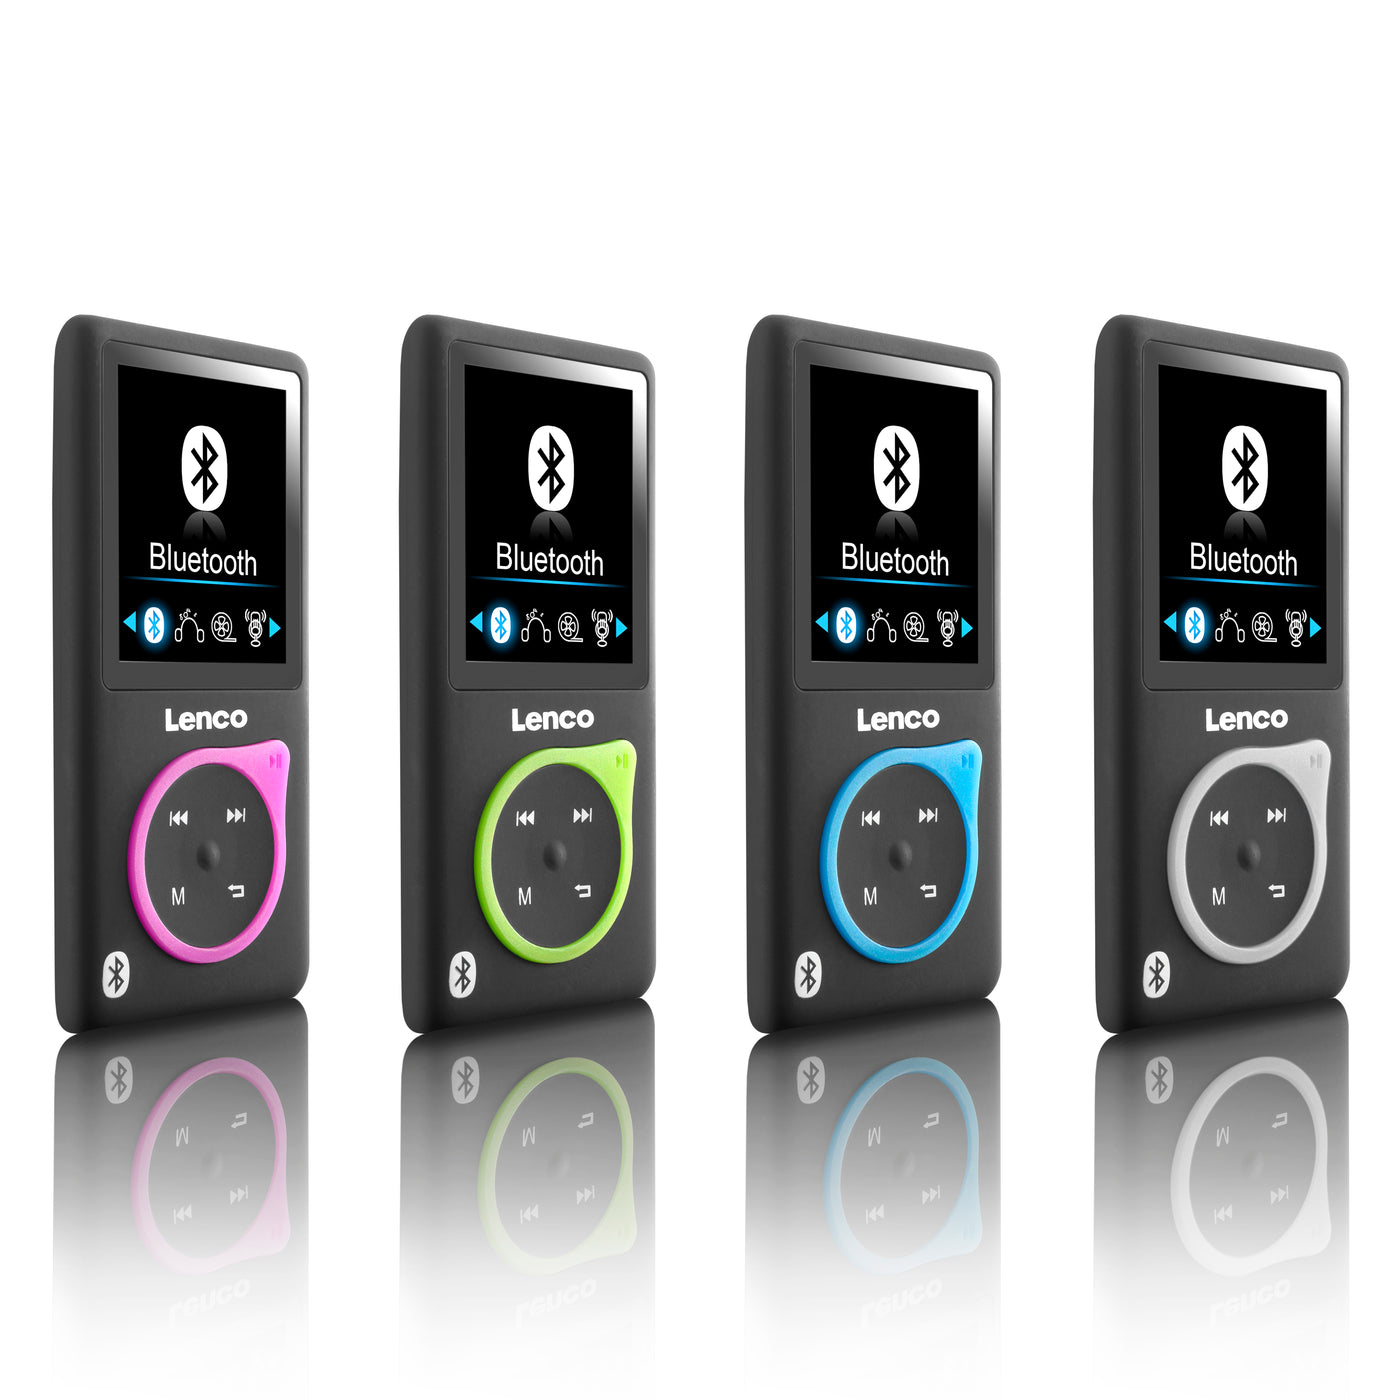 LENCO XEMIO-768 GREY - MP3/MP4 speler met Bluetooth® incl. 8GB micro SD kaart - Grijs